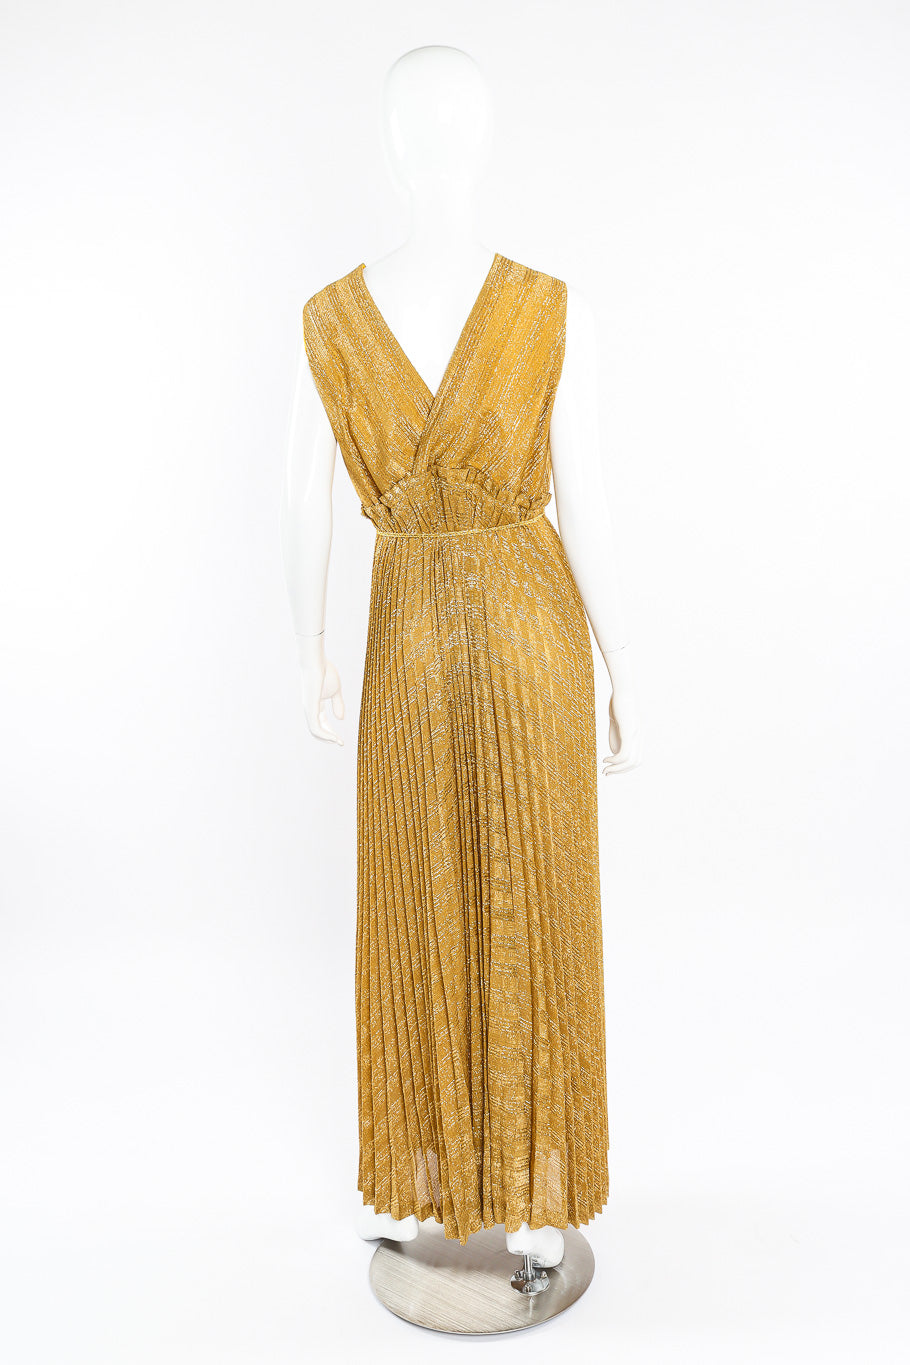 Georgie Keyloun metallic dress back view on mannequin @recessla